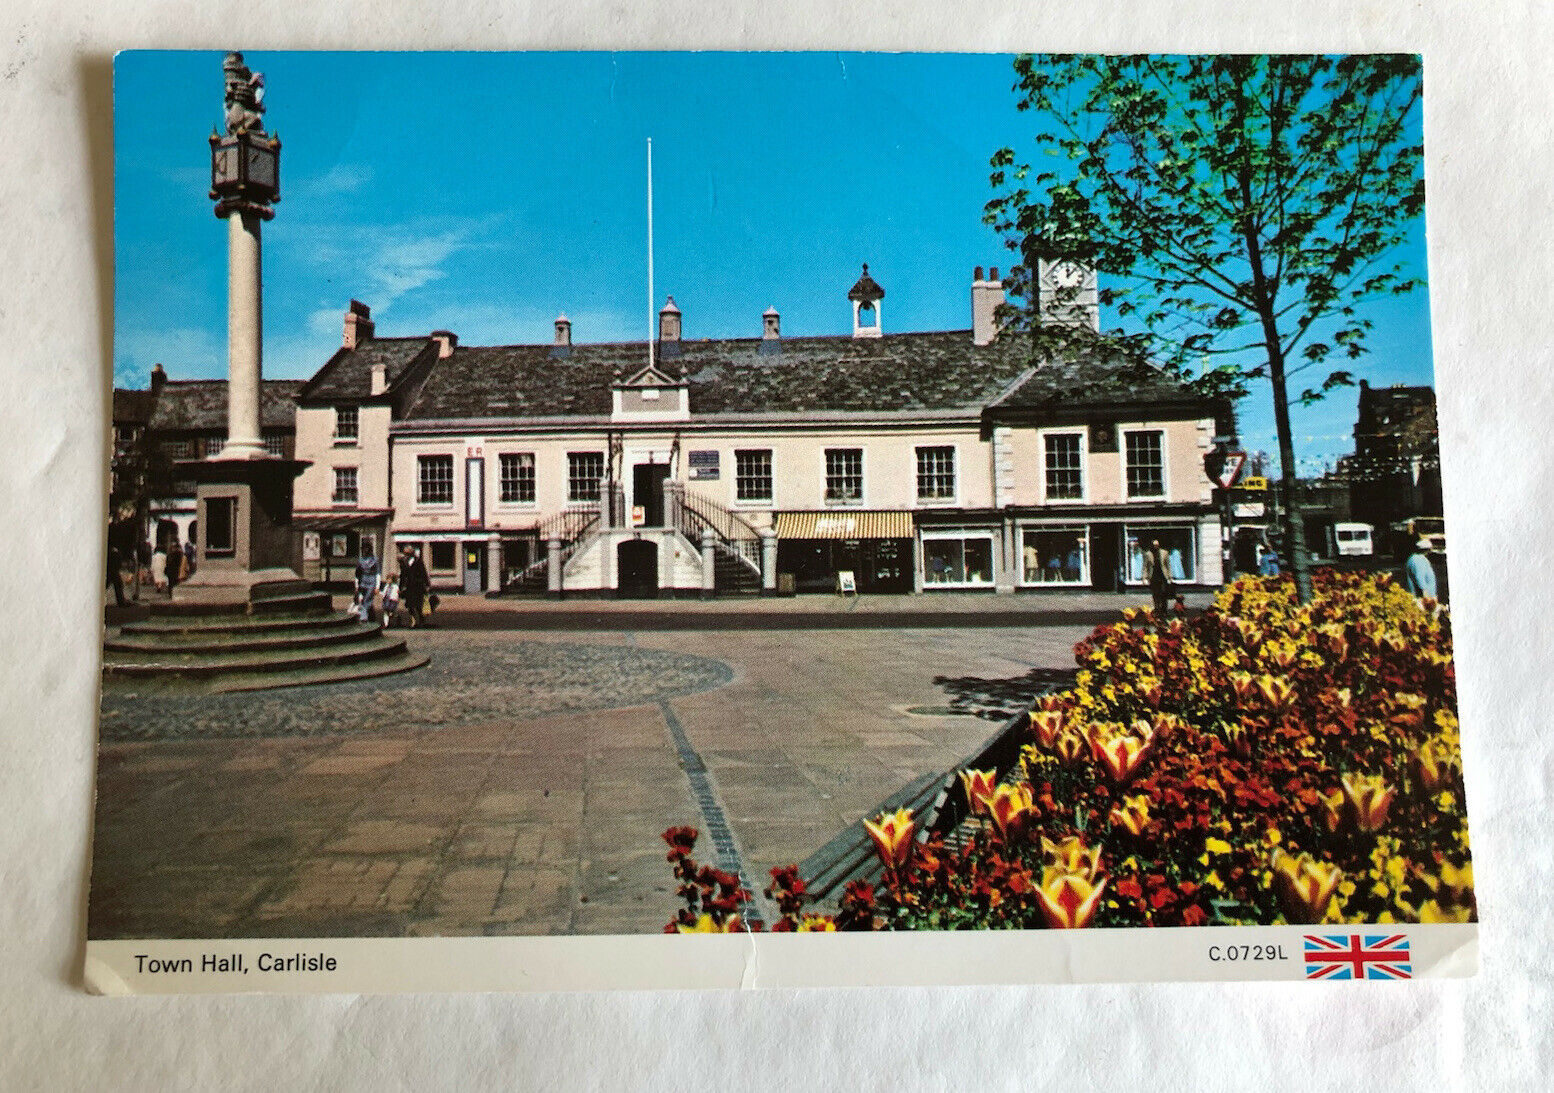 House Clearance - Carlisle town hall vintage service